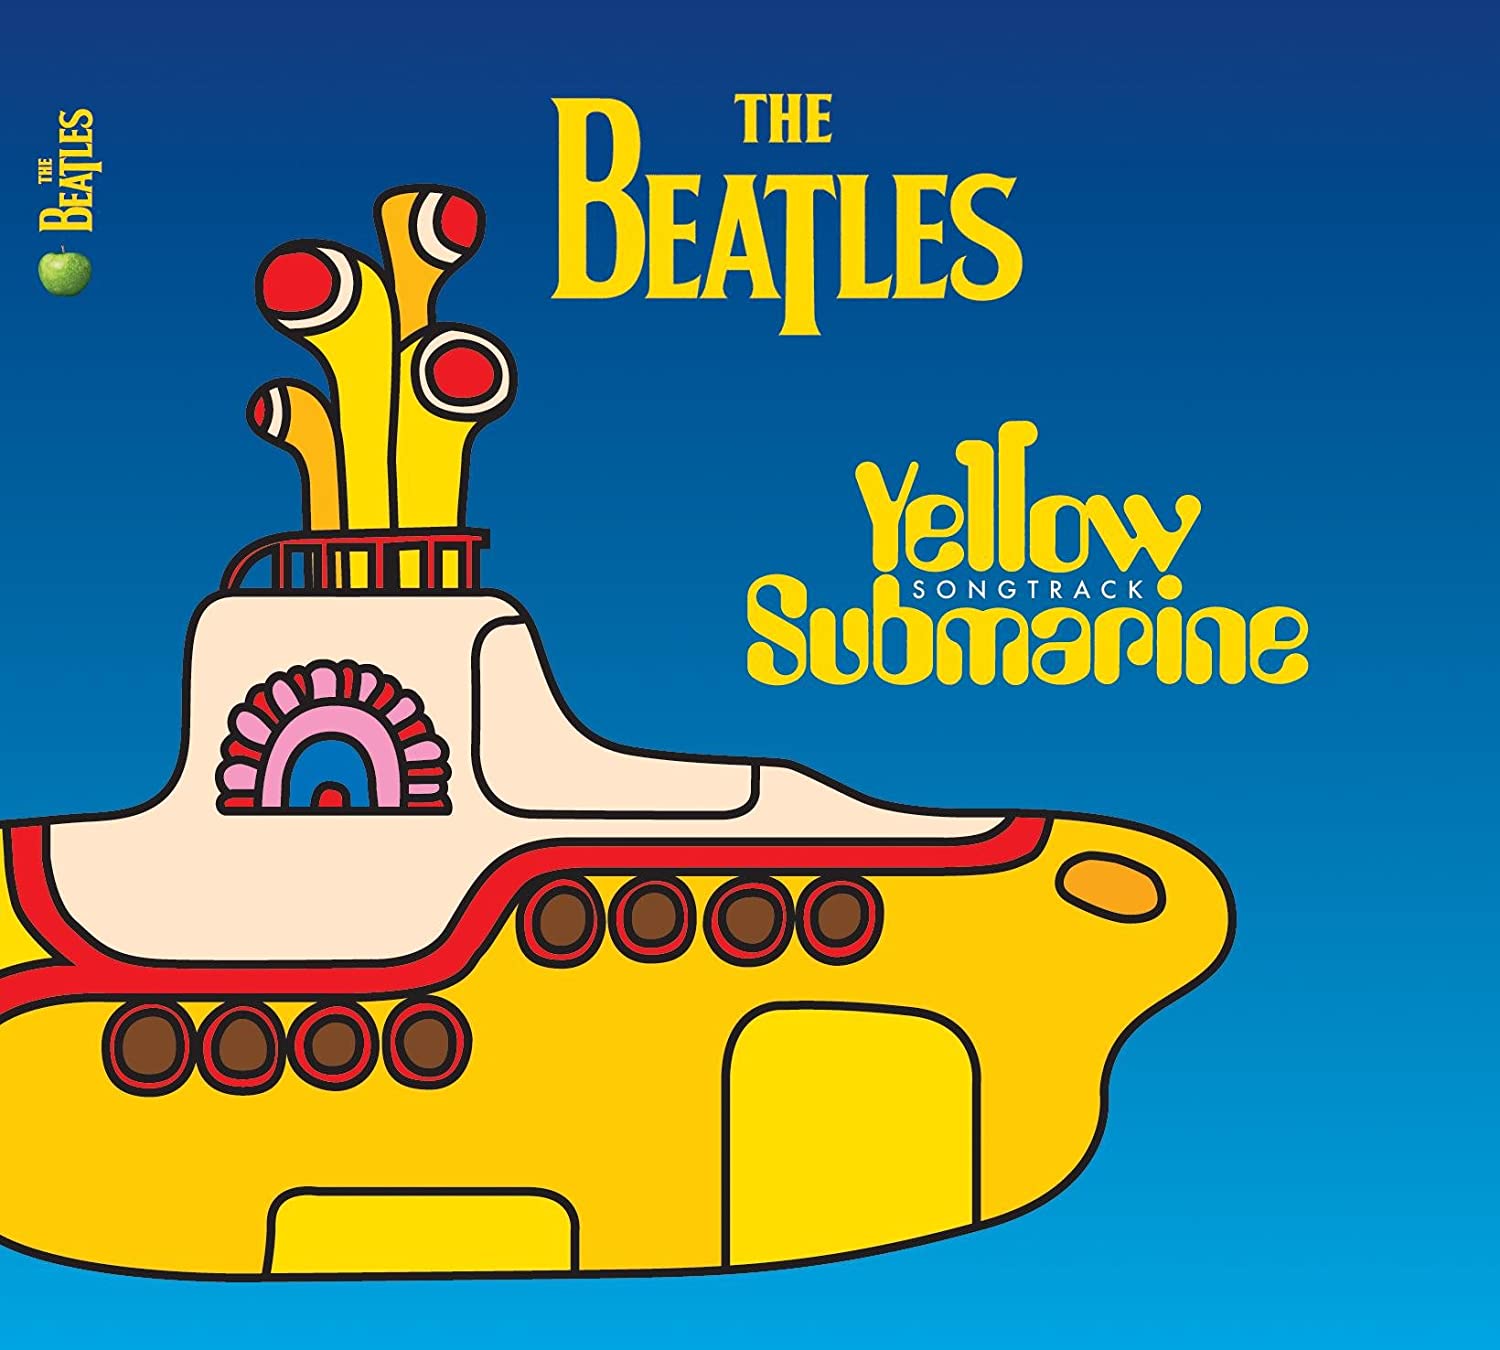 The Beatles - 1999 - Yellow Submarine Songtrack [Vinyl Rip] - 24bit 192kHz - DR10